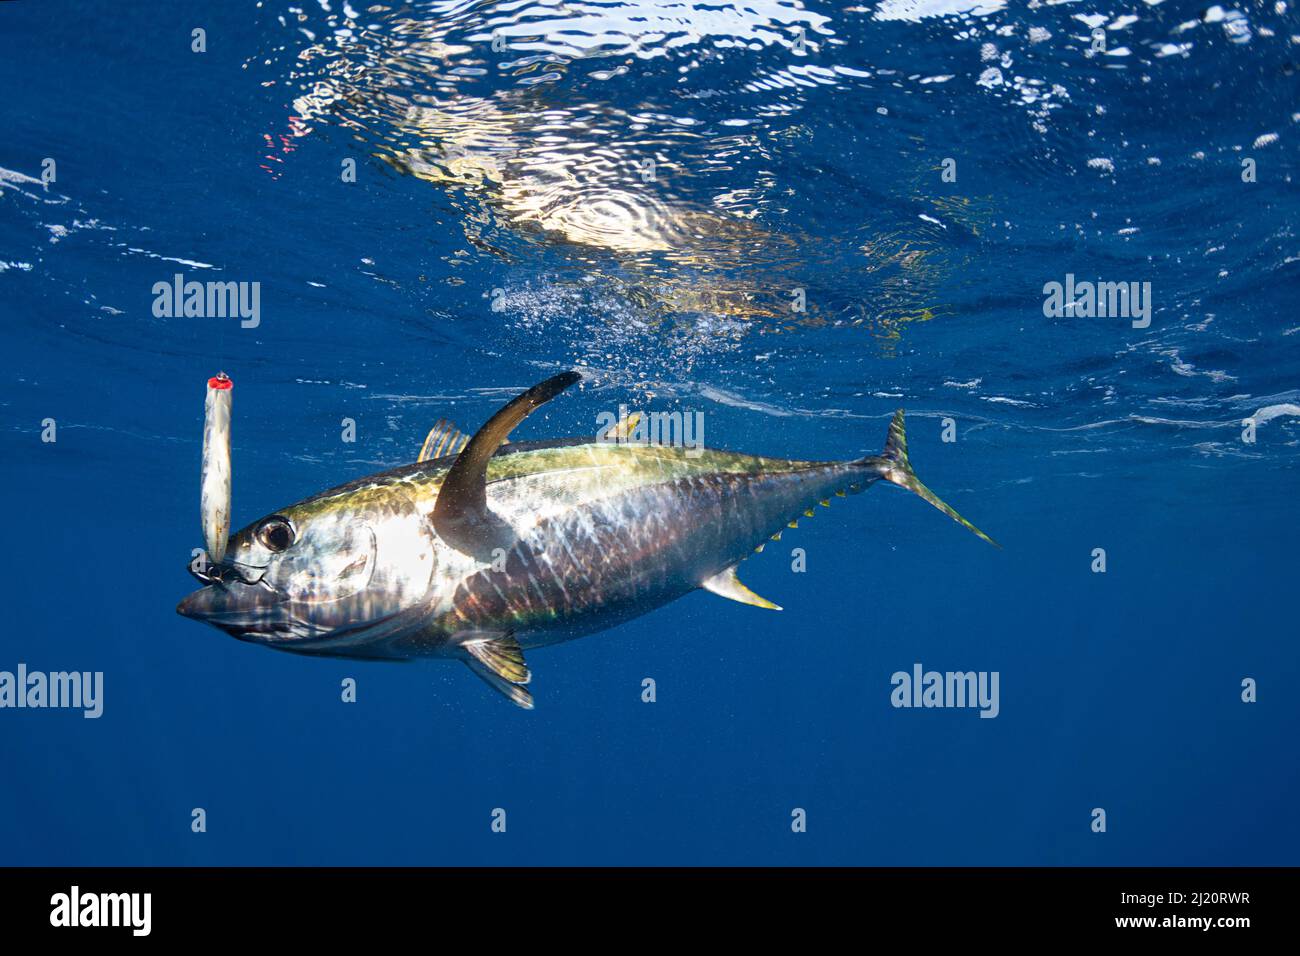 Yellowfin tuna (Thunnus albacares) hooked on lure with treble hook. Pacific Ocean, Cabo San Lucas, Baja California, Mexico. 2009. Stock Photo